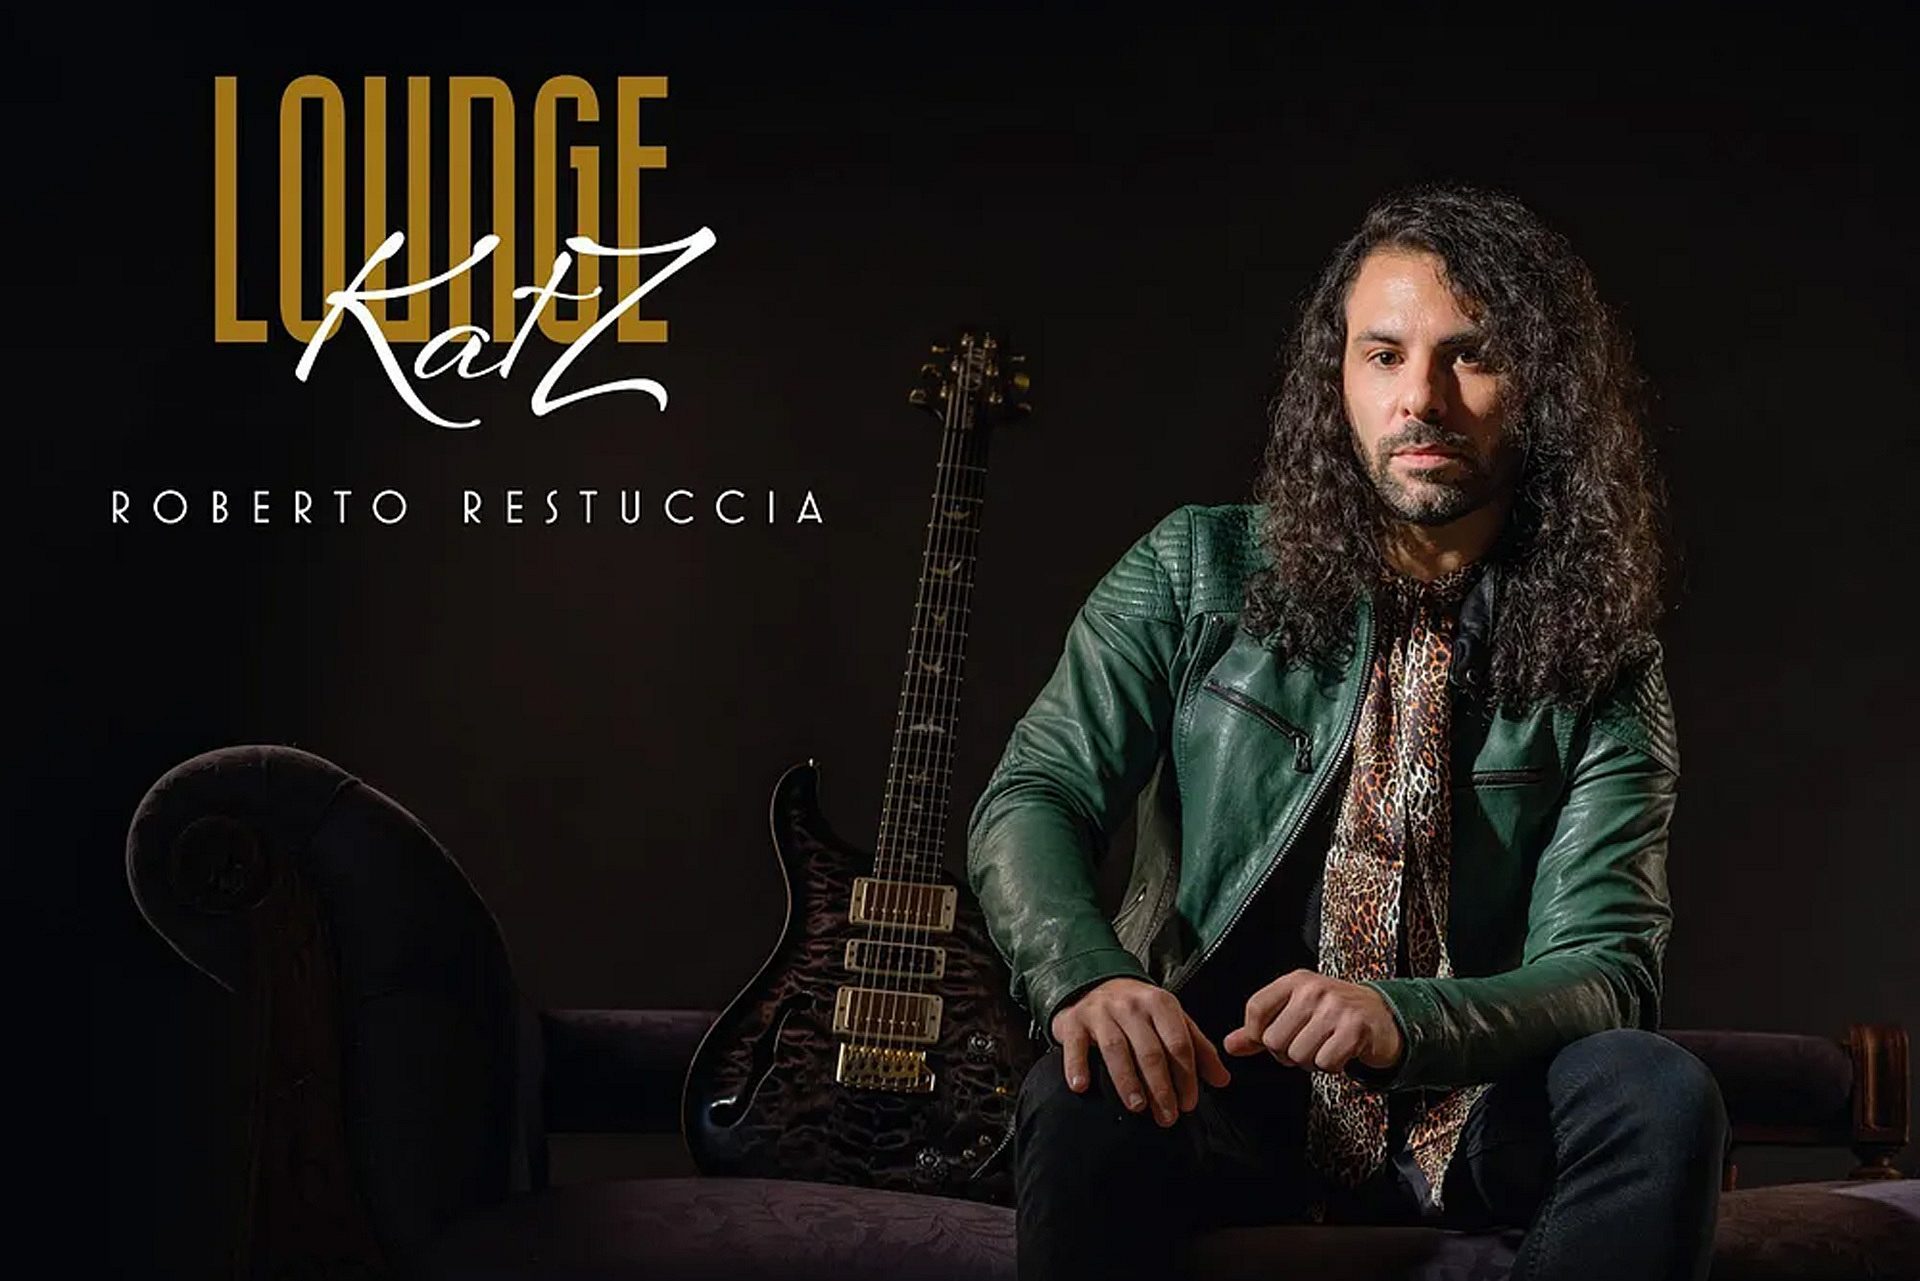 Roberto Restuccia Releases New Album - 'Lounge Katz'